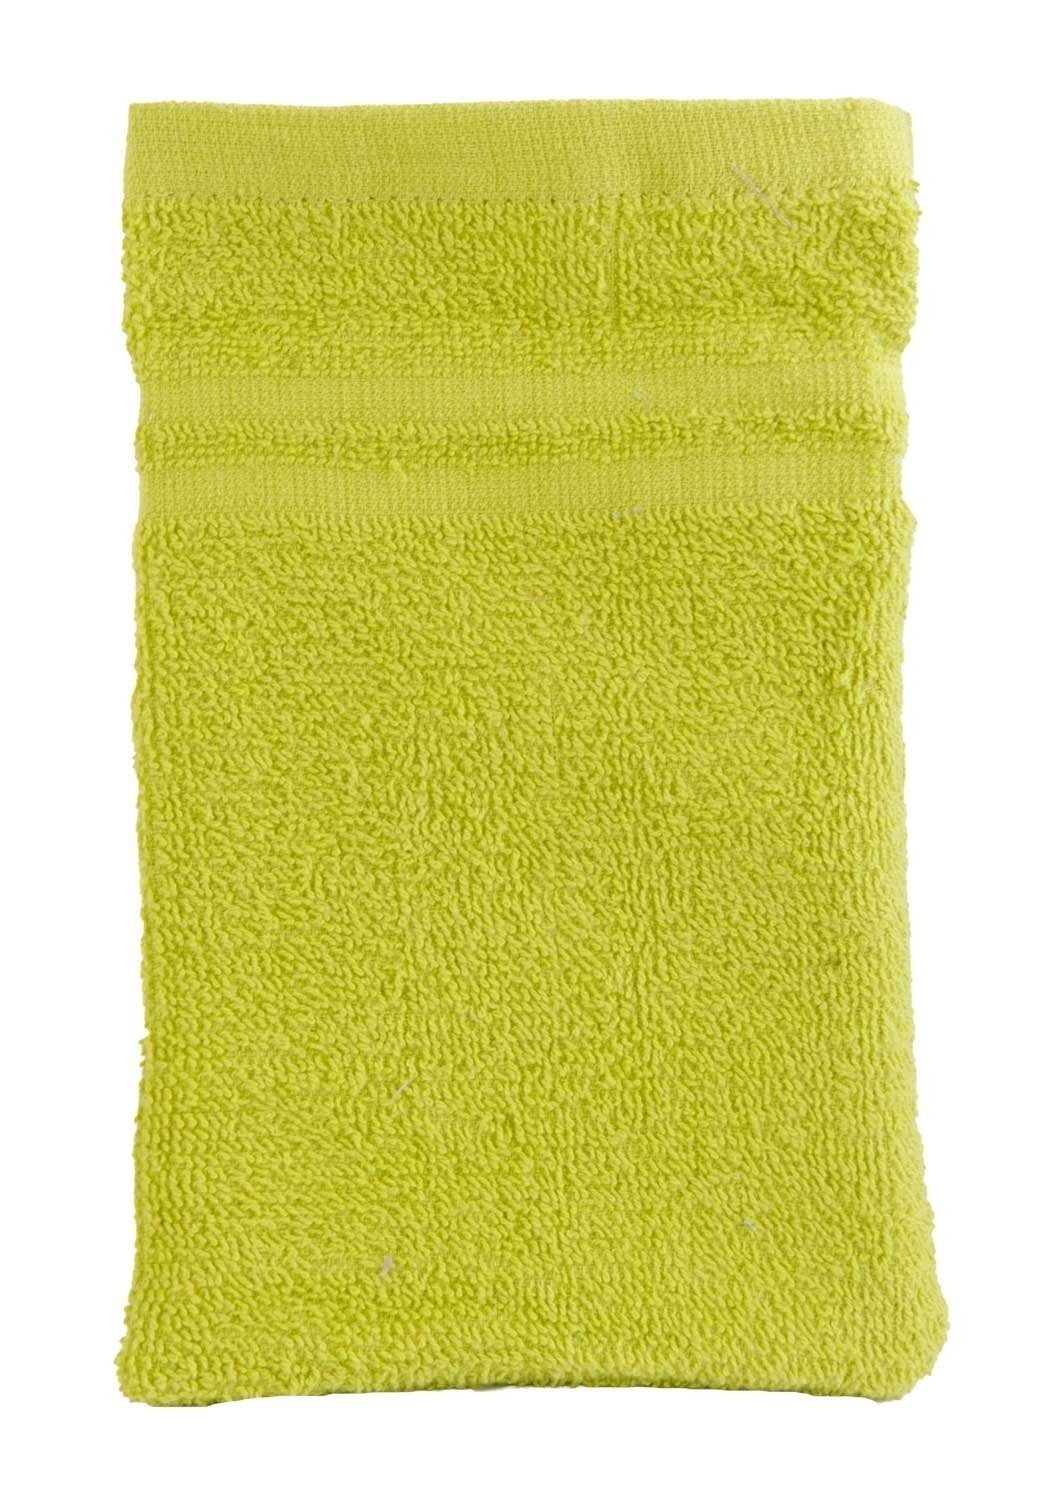 Waschhandschuh Waschhandschuh, 21 B L Grün, cm, 15 cm